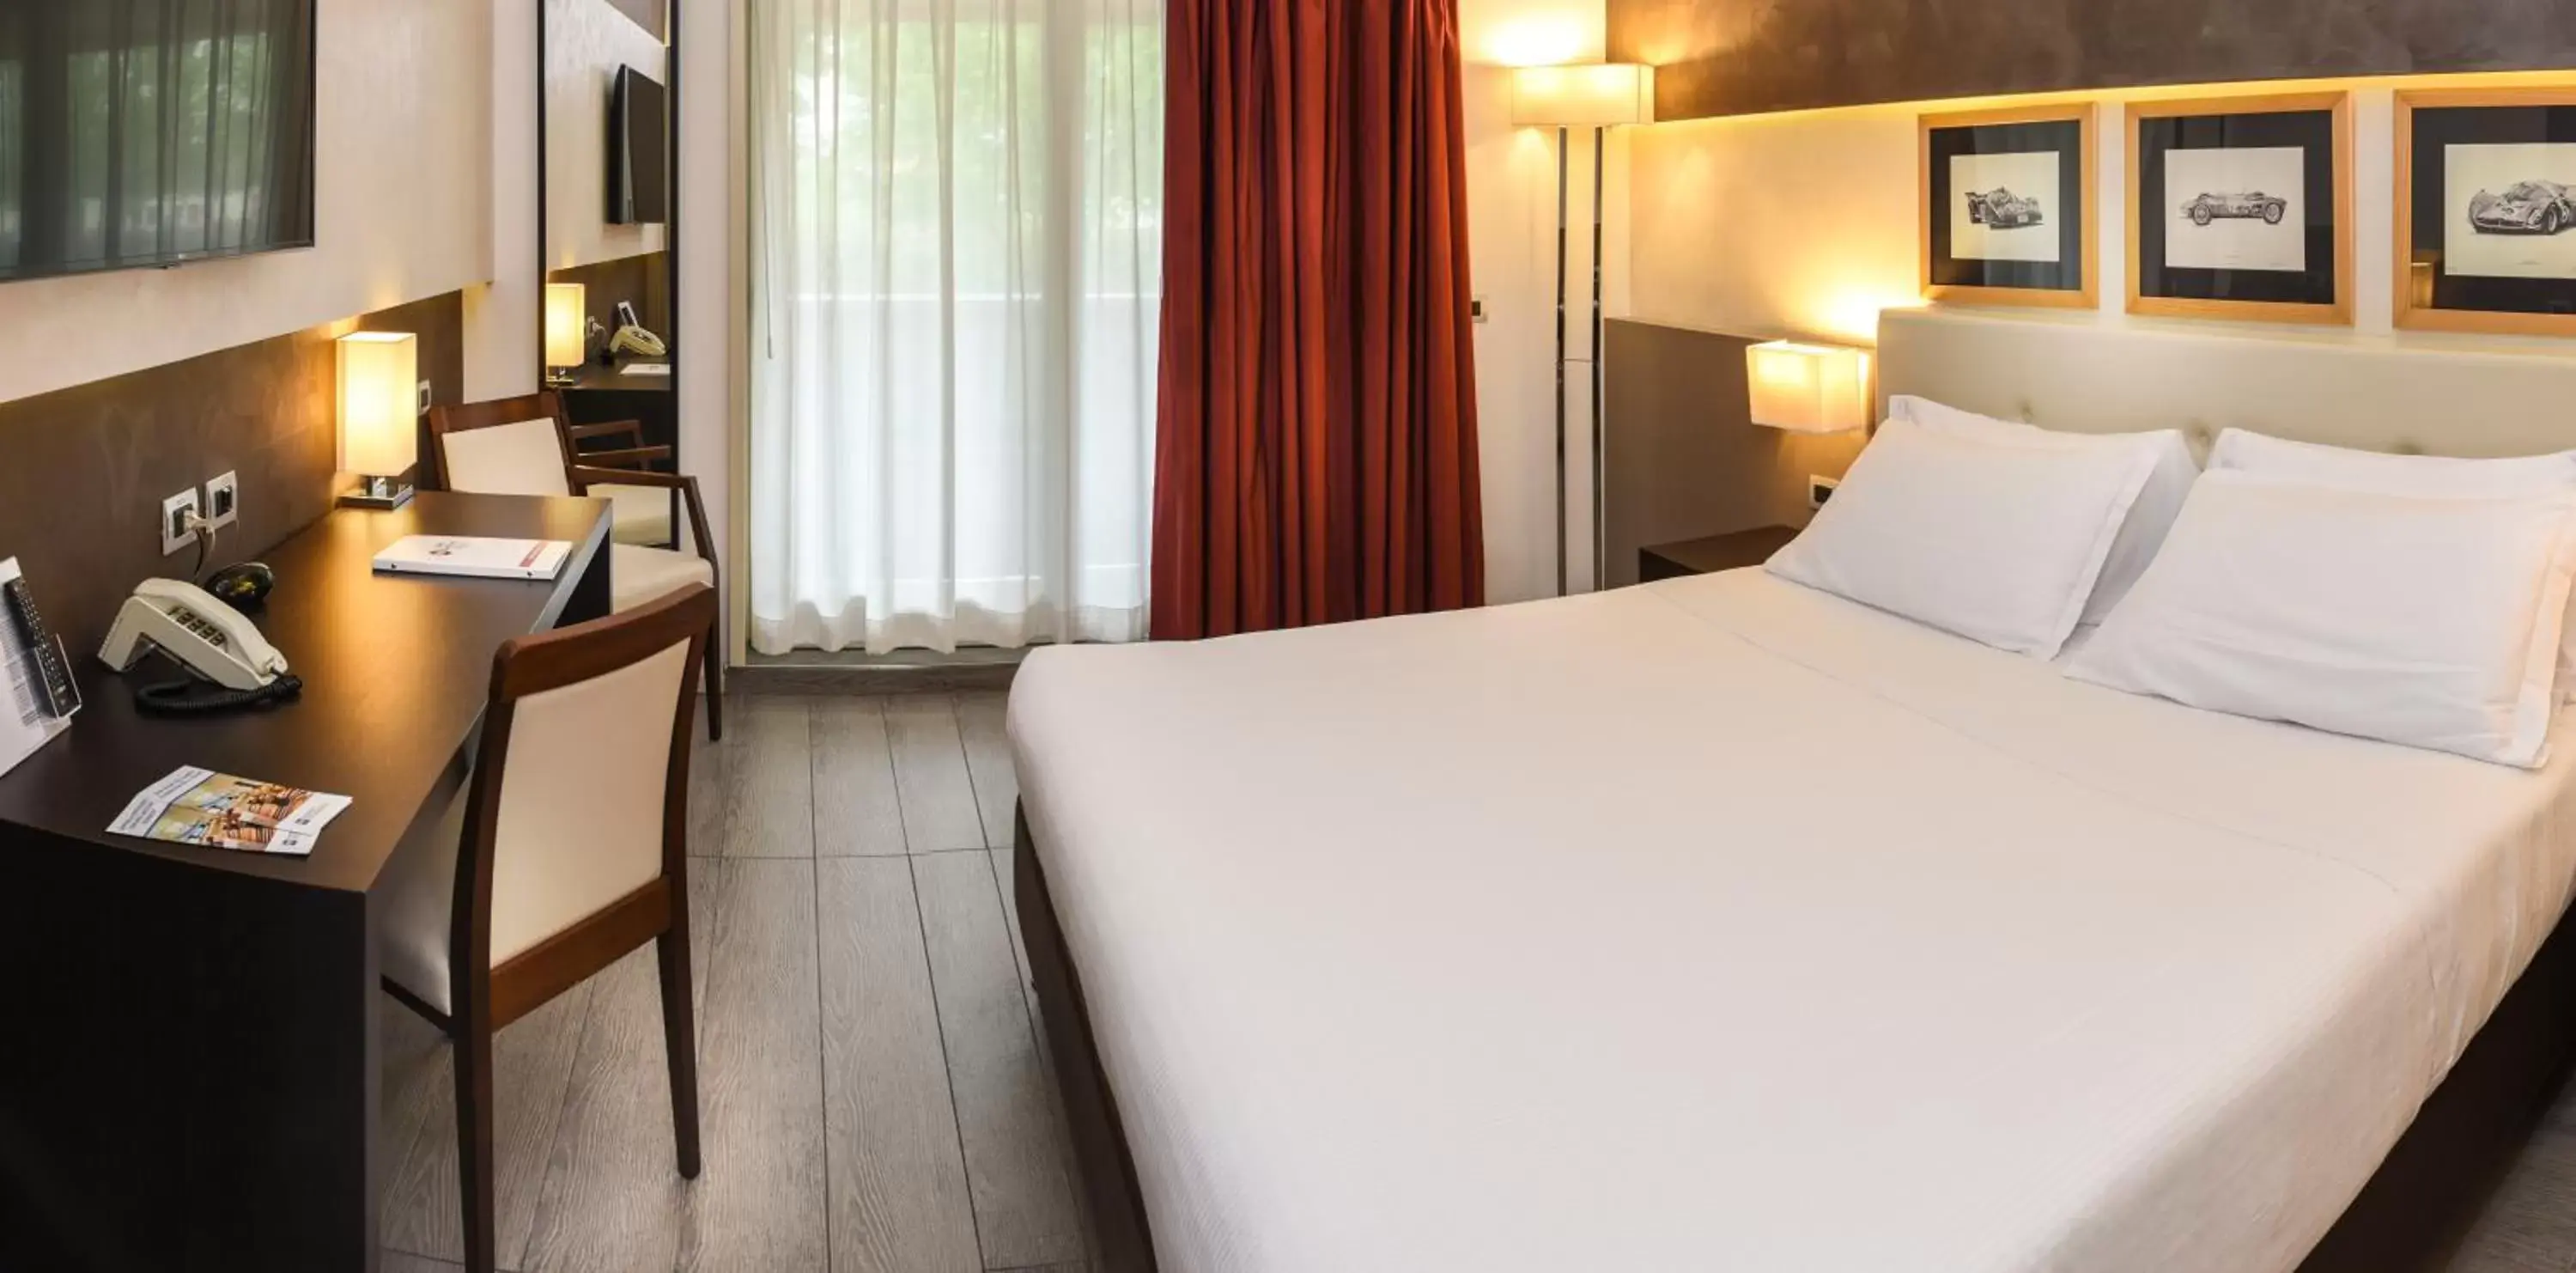 Bedroom, Bed in Best Western Plus Hotel Modena Resort